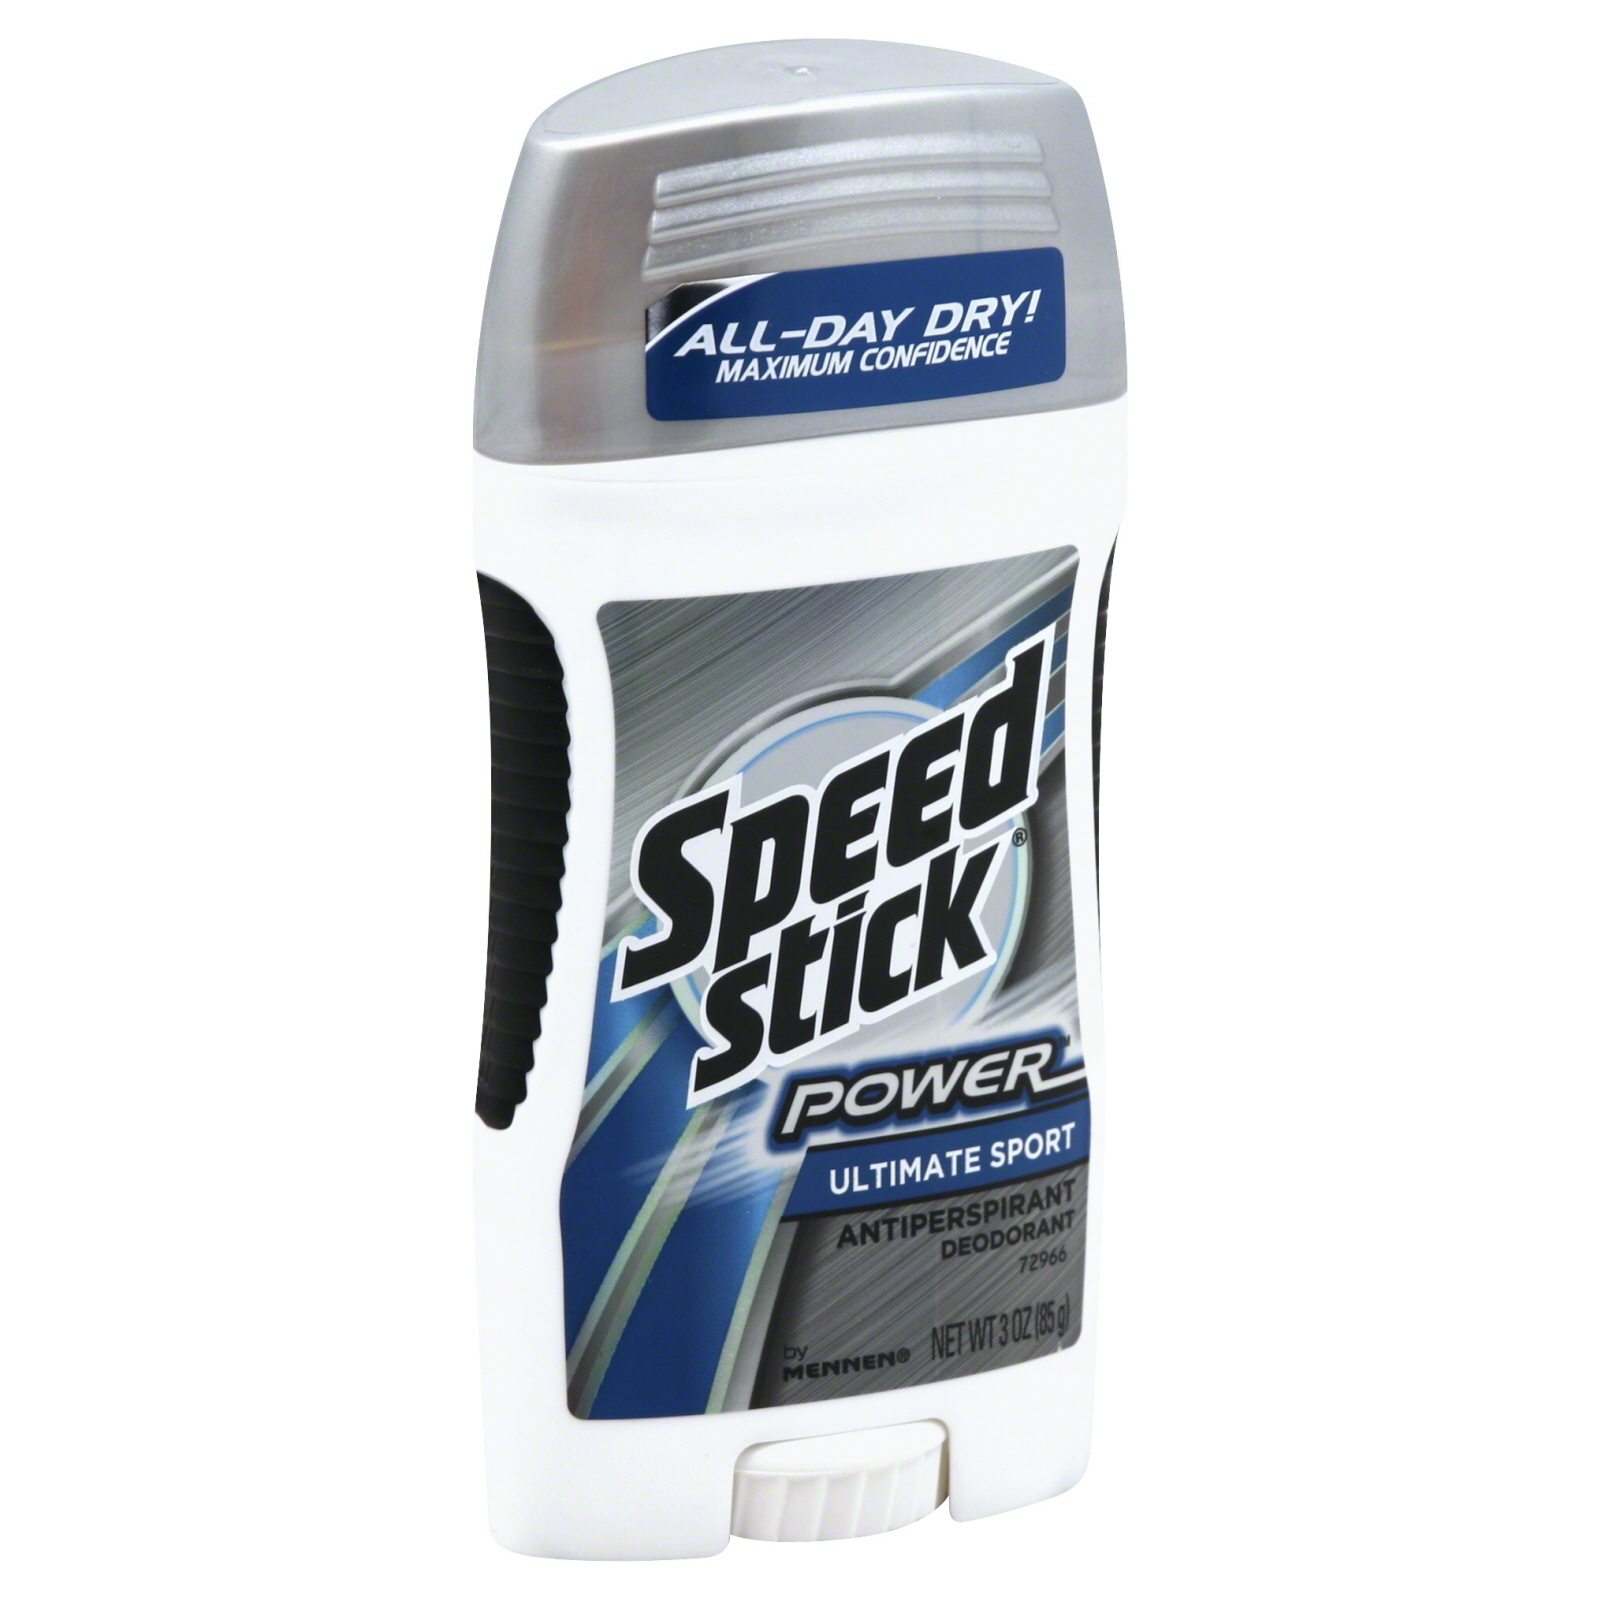 Antiperspirant Deodorant Sport Talc 3 Oz 85 G